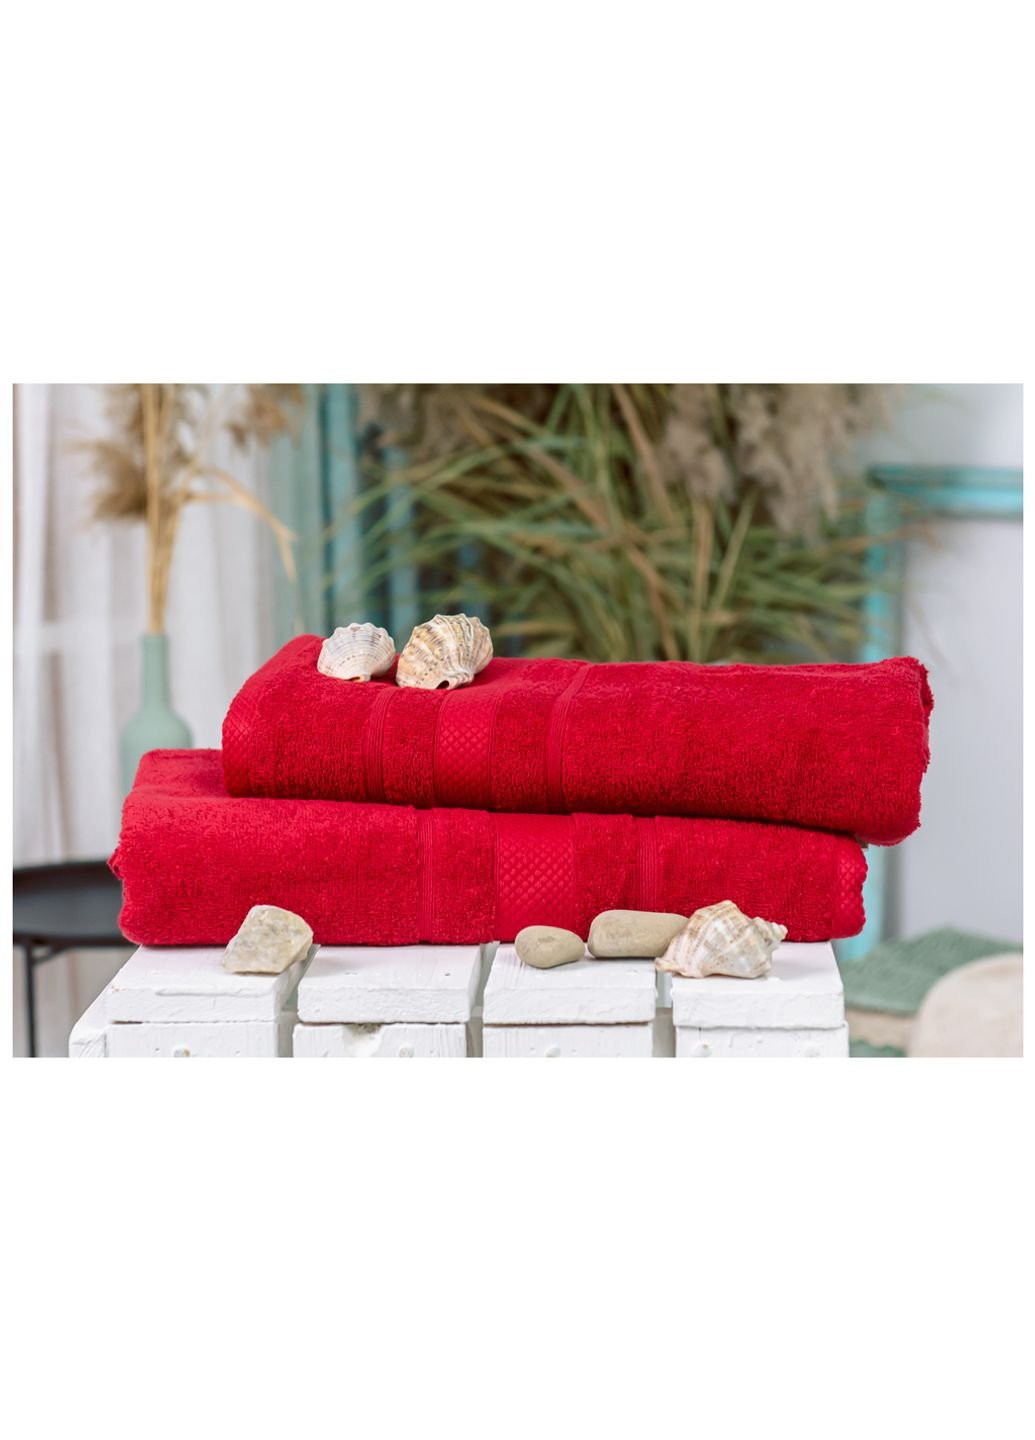 Mirson полотенце набор банный №5000 softness bordo 50x90, 70x140 (2200003182927) красный производство - Украина